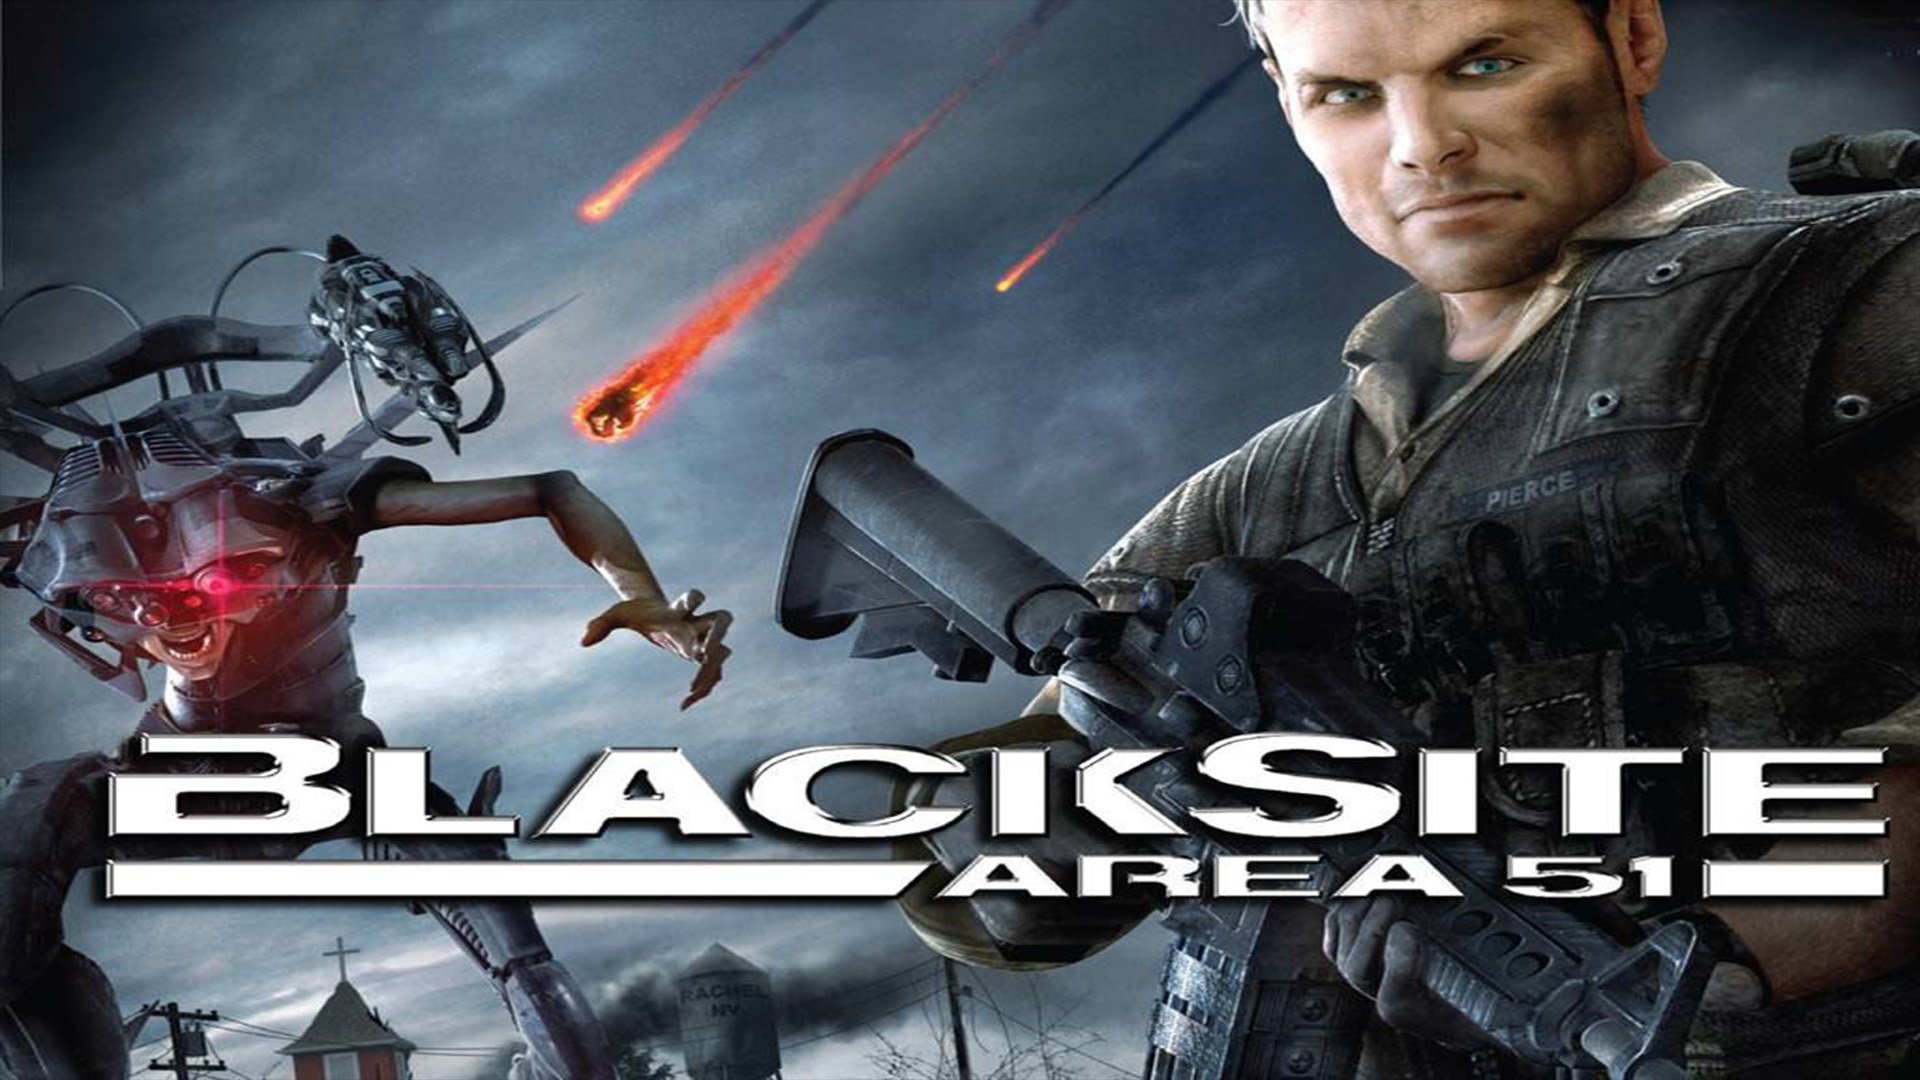 BlackSite: Area 51 Gameplay (PC HD) 